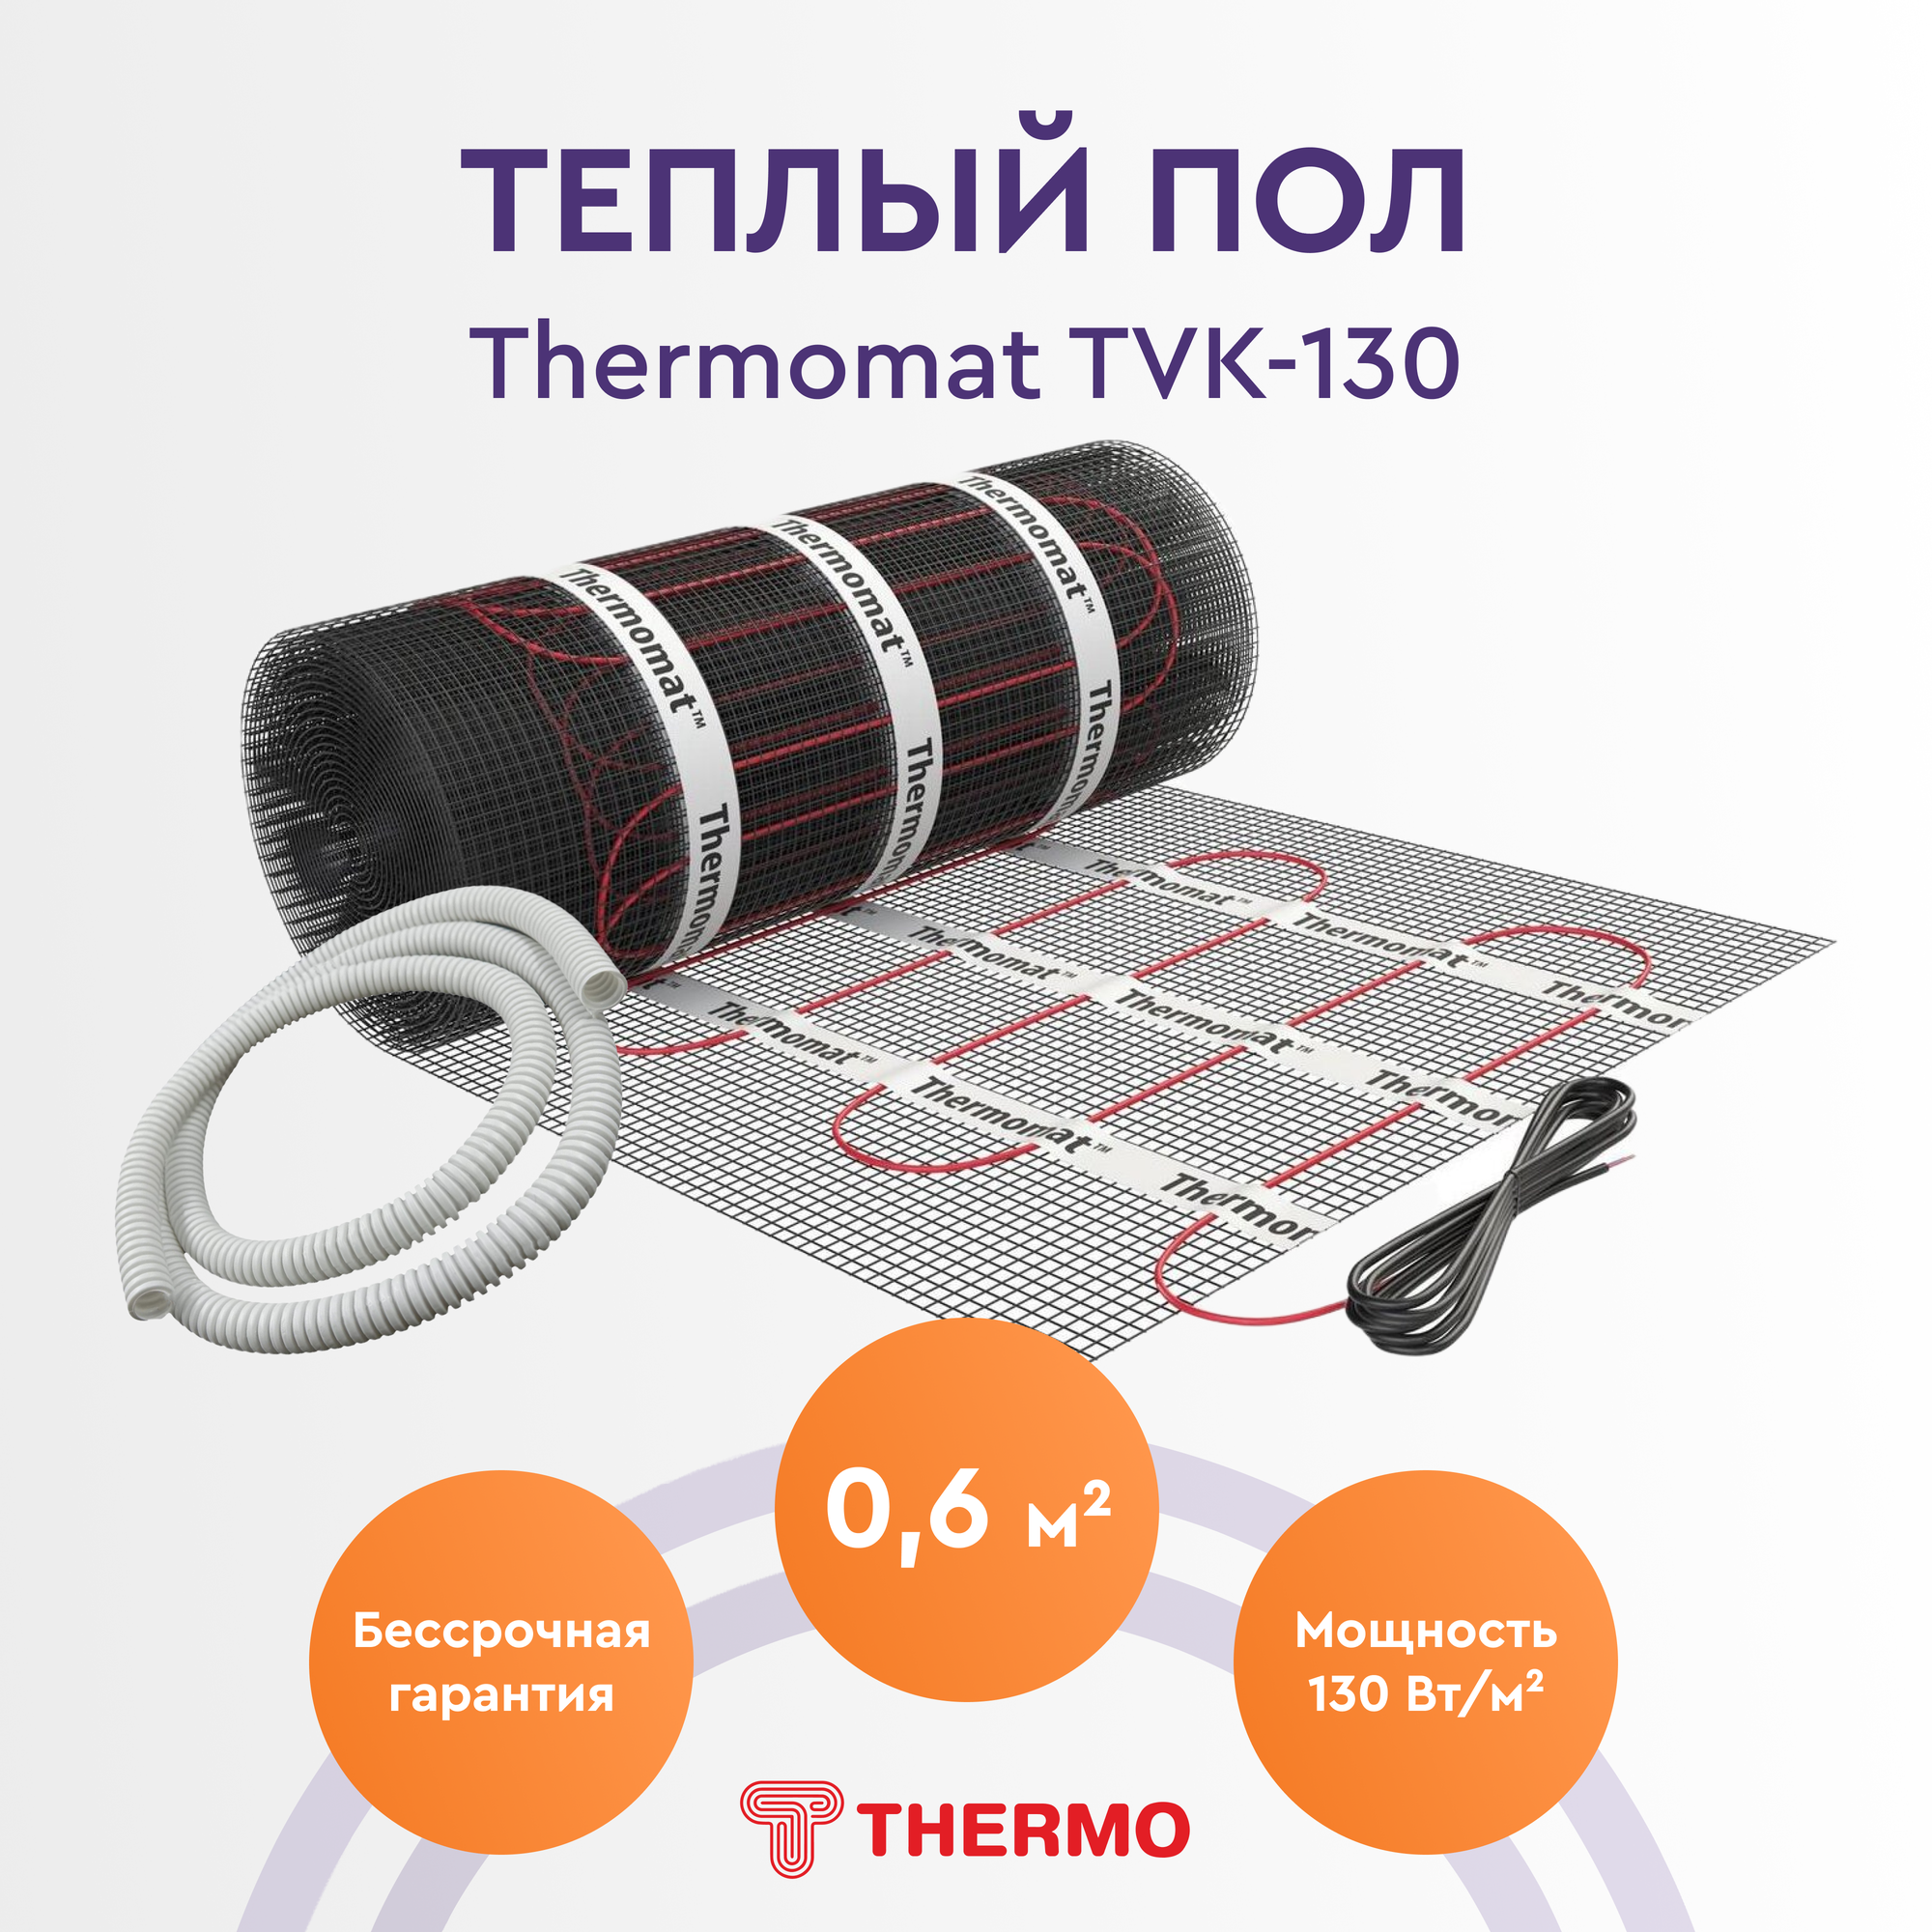 Теплый пол Thermo Thermomat TVK-130 0,6м. кв.